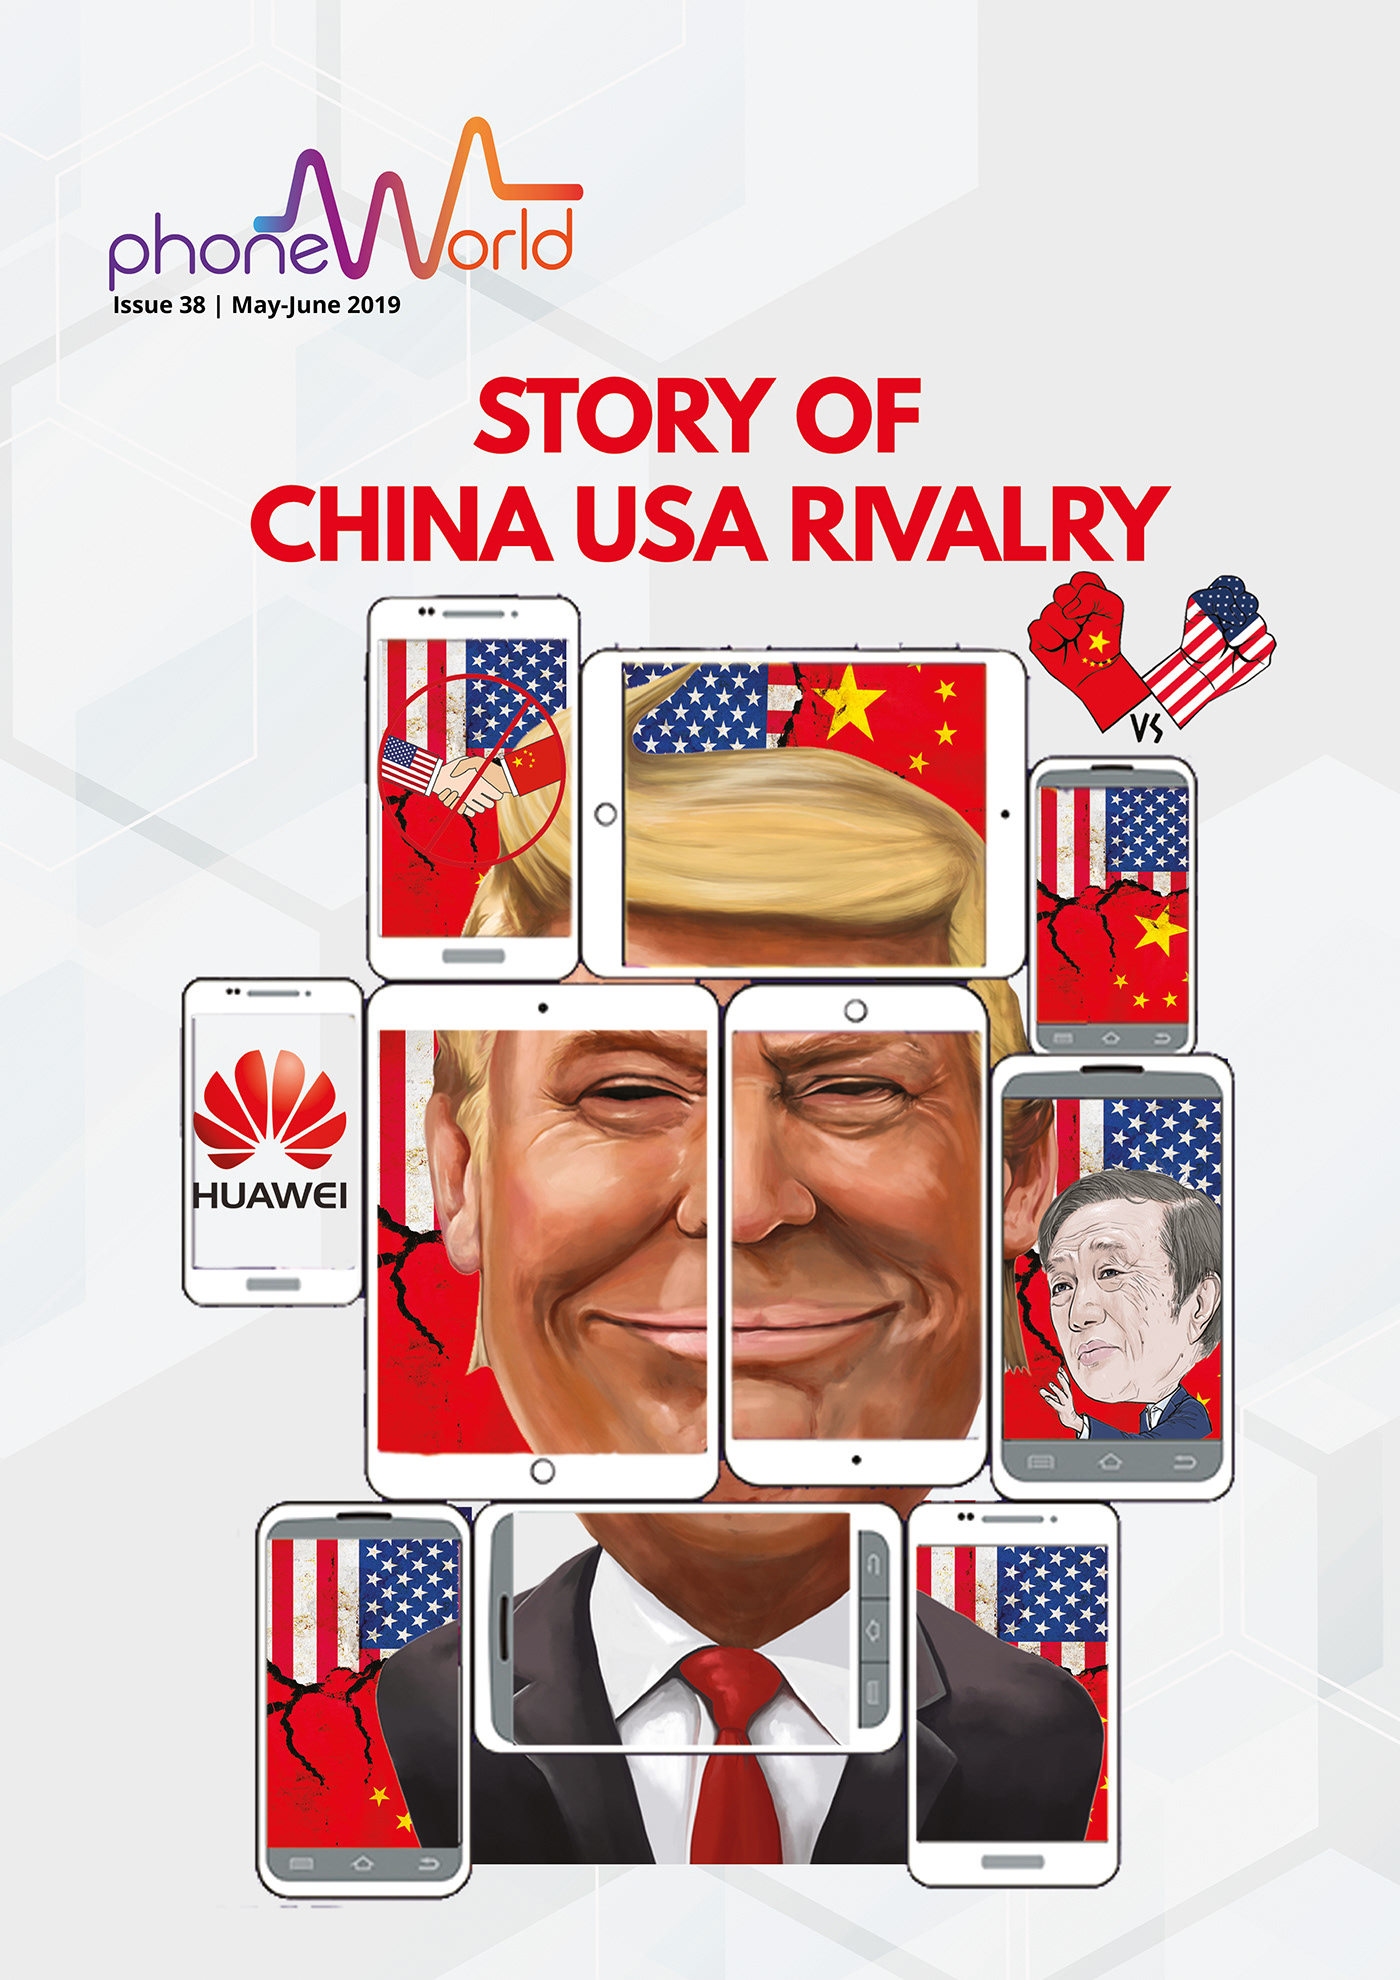 Donald Trump huawei china usa magazine shaheer riaz phoneworld apple iphone fight